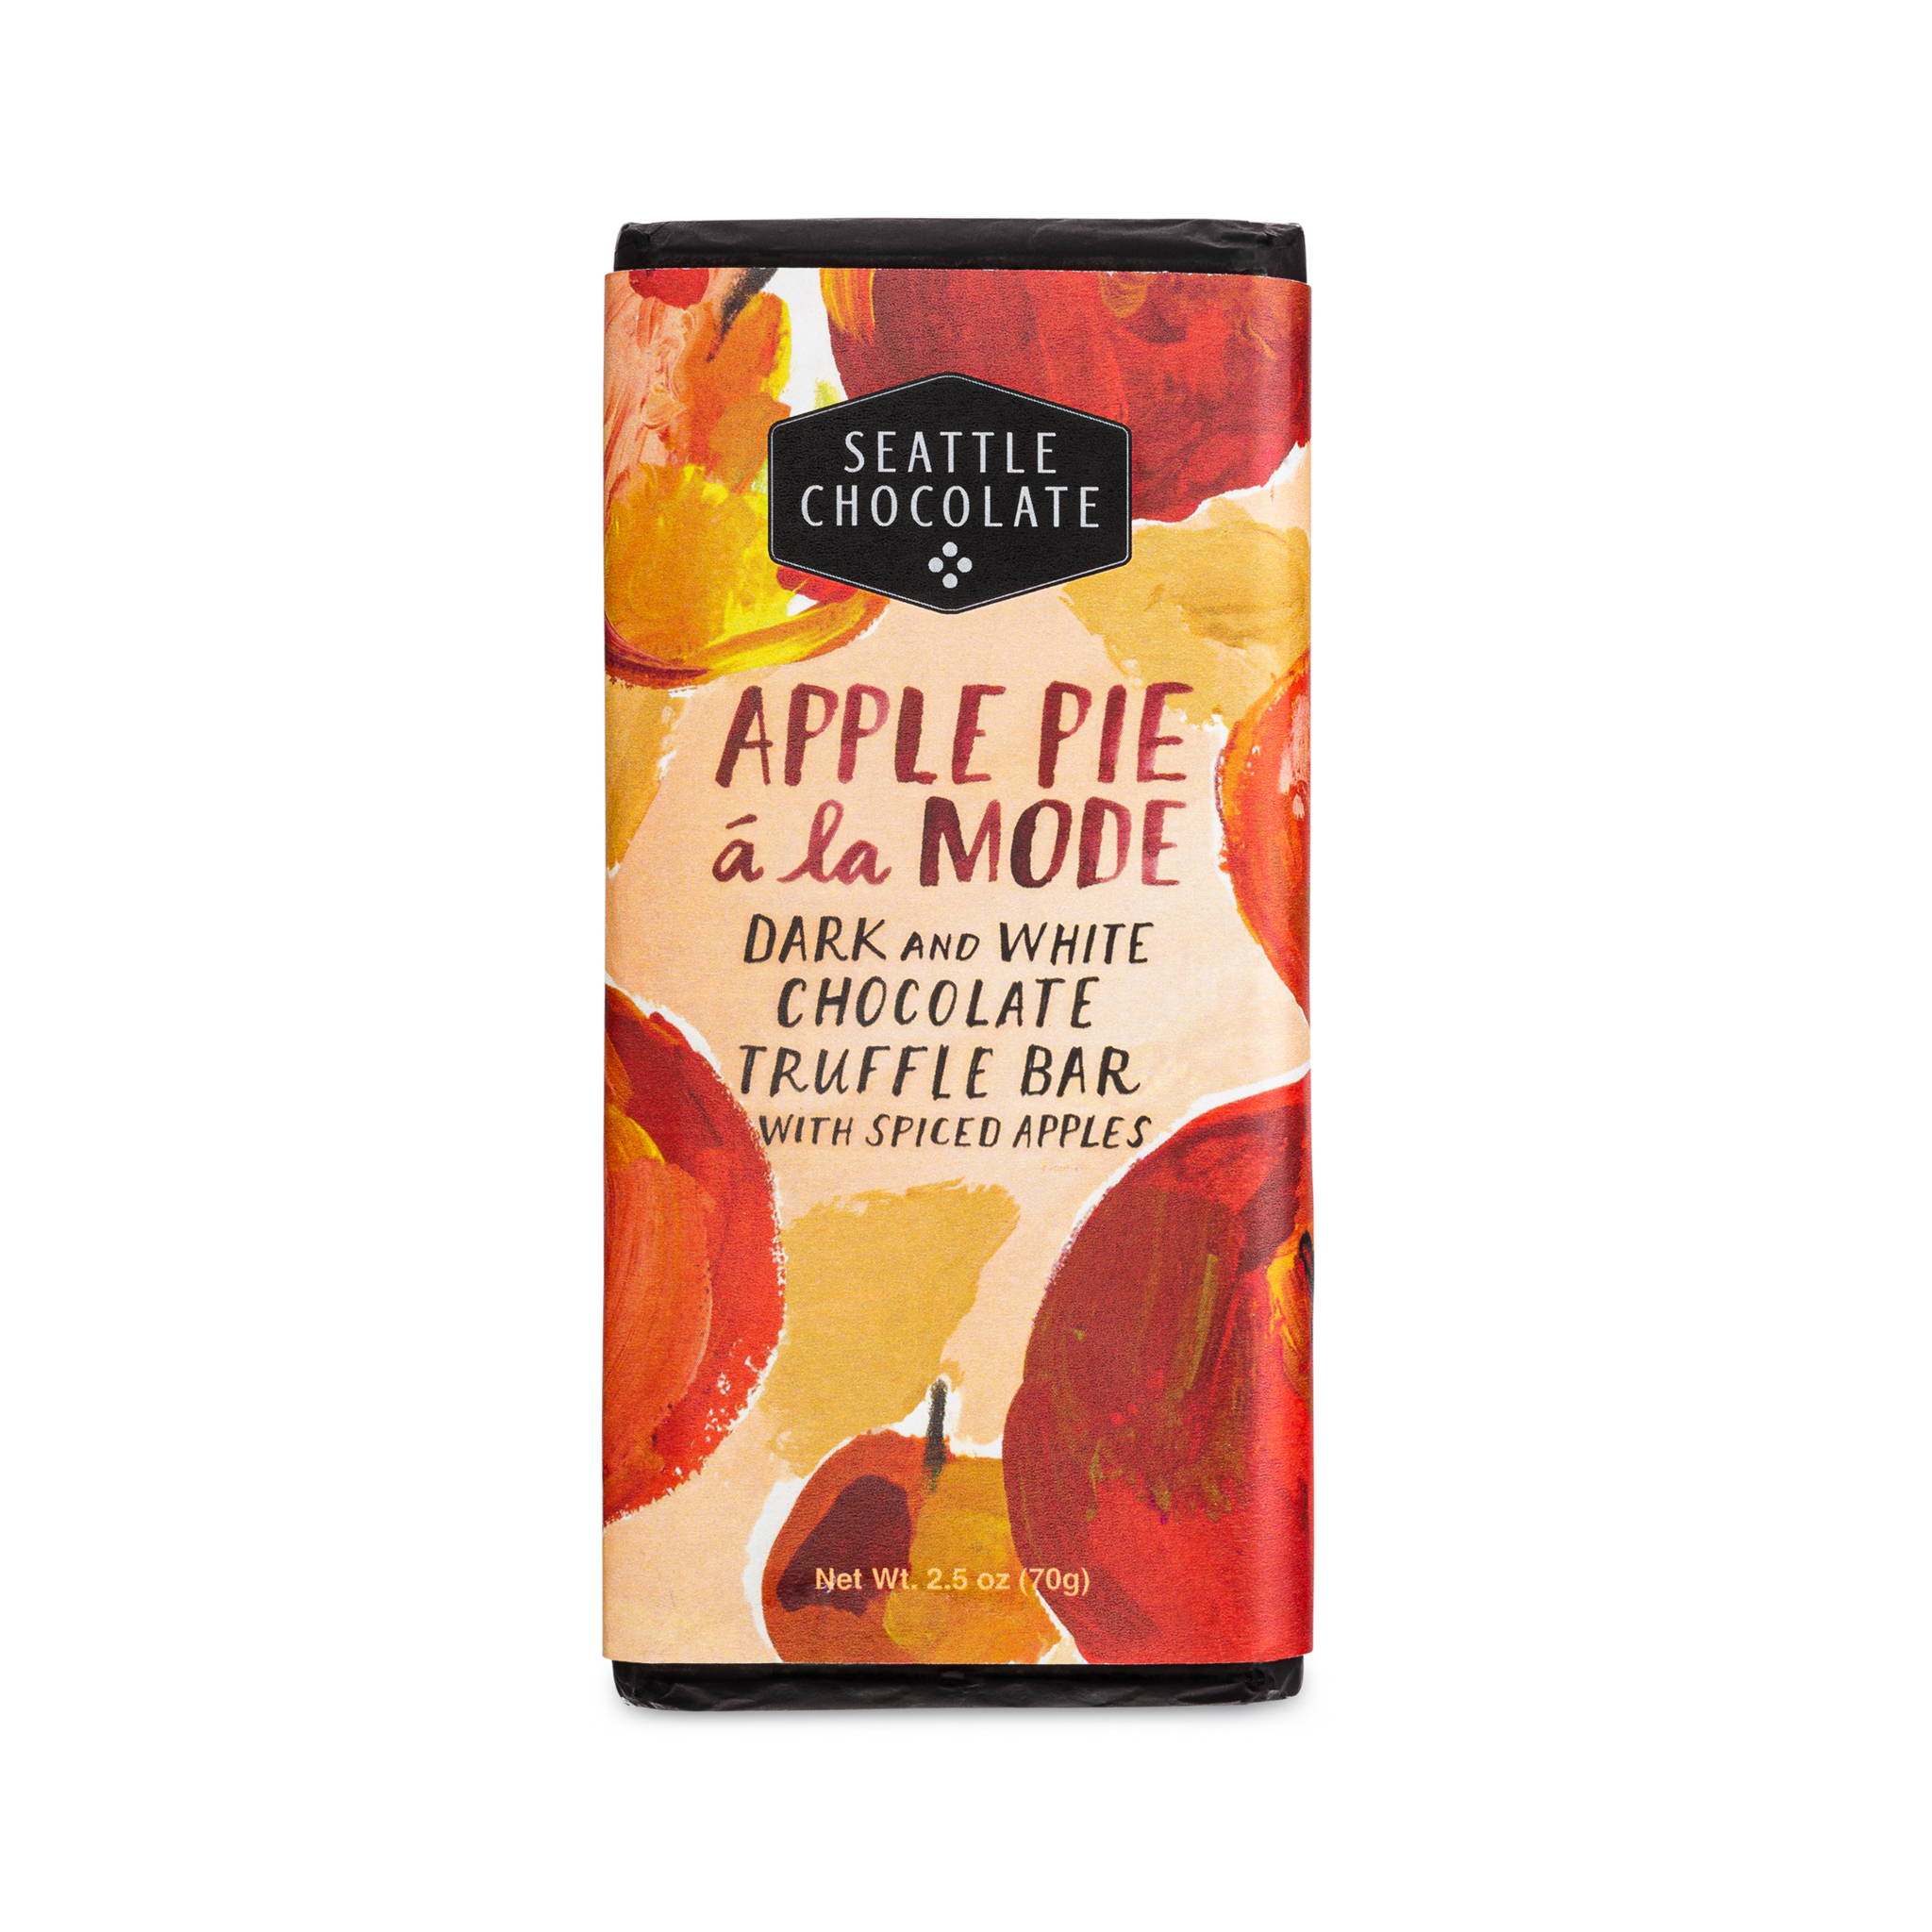 Apple Pie a la Mode